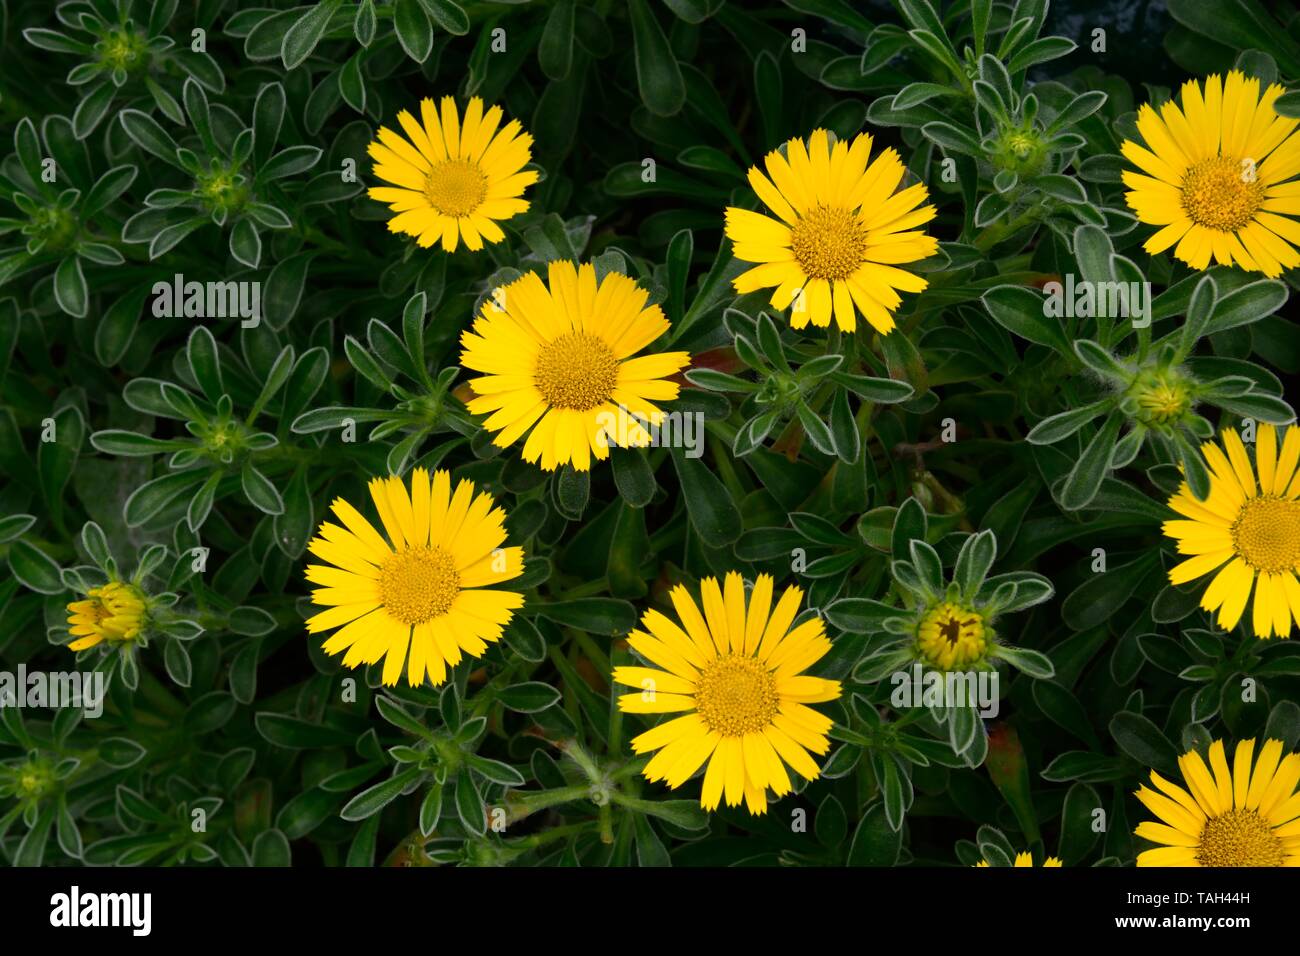 Pallenis maritima beach daisy sea aster gold coin daisy Asteriscus gold coin yellow daisy flowers Stock Photo